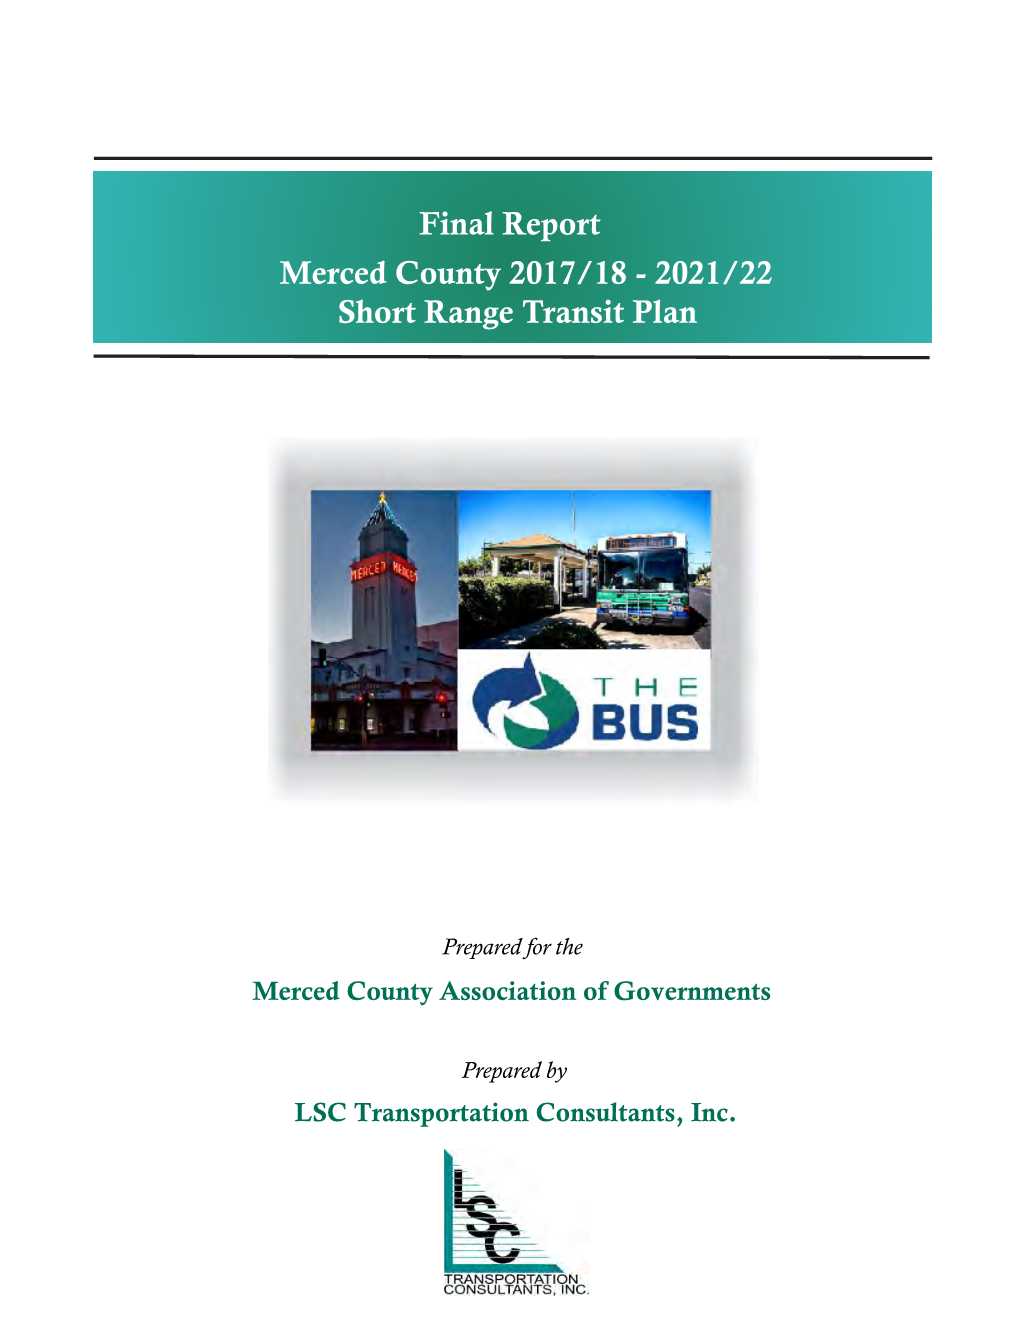 Final Report Merced County 2017/18 - 2021/22 Short Range Transit Plan